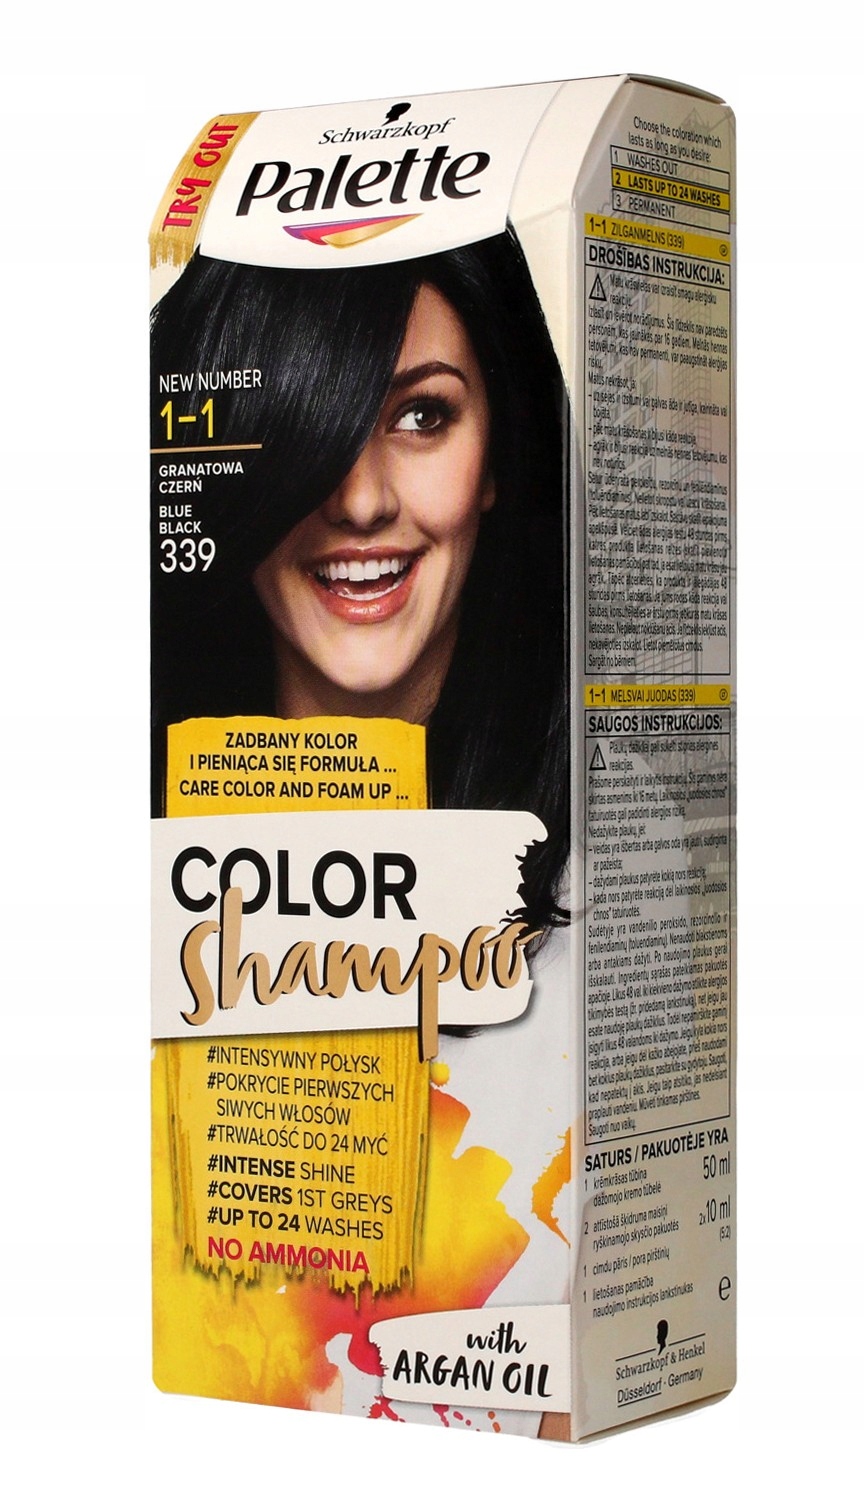 szampon palette 244 na mokre włosy